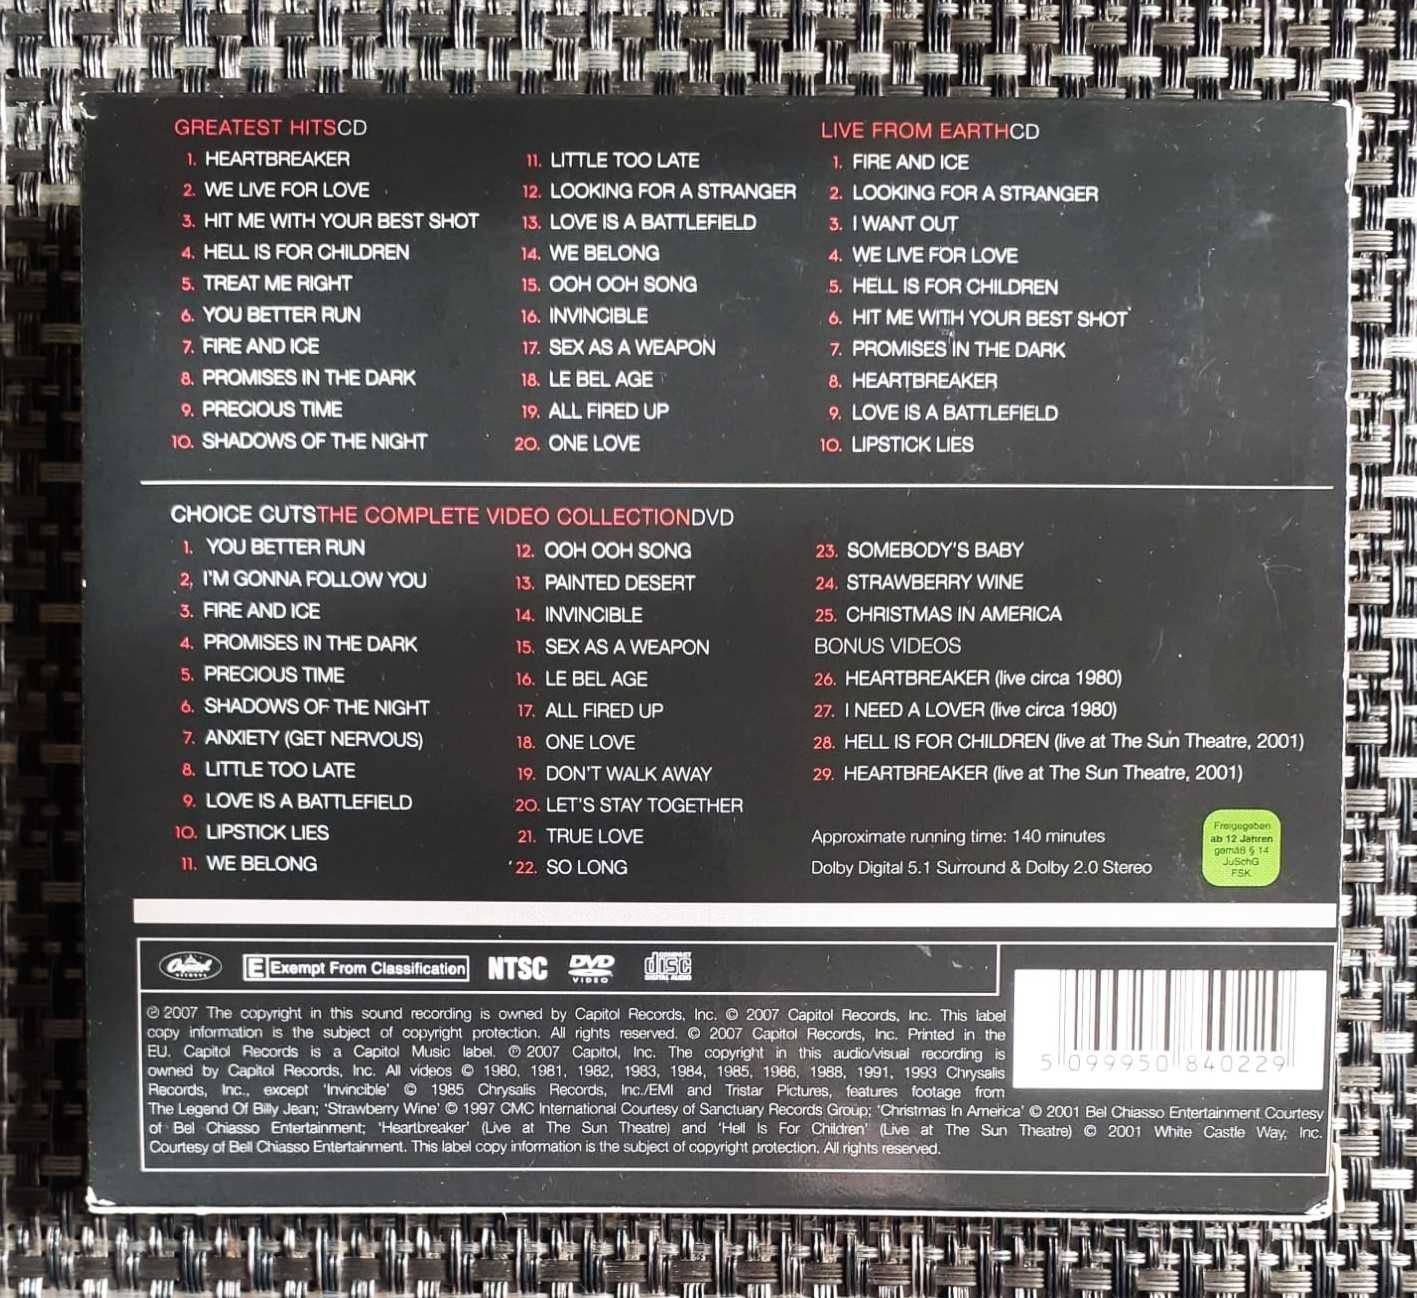 Pat Benatar - Greatest Hits & Live From Earth CDs + Choice Cuts DVD